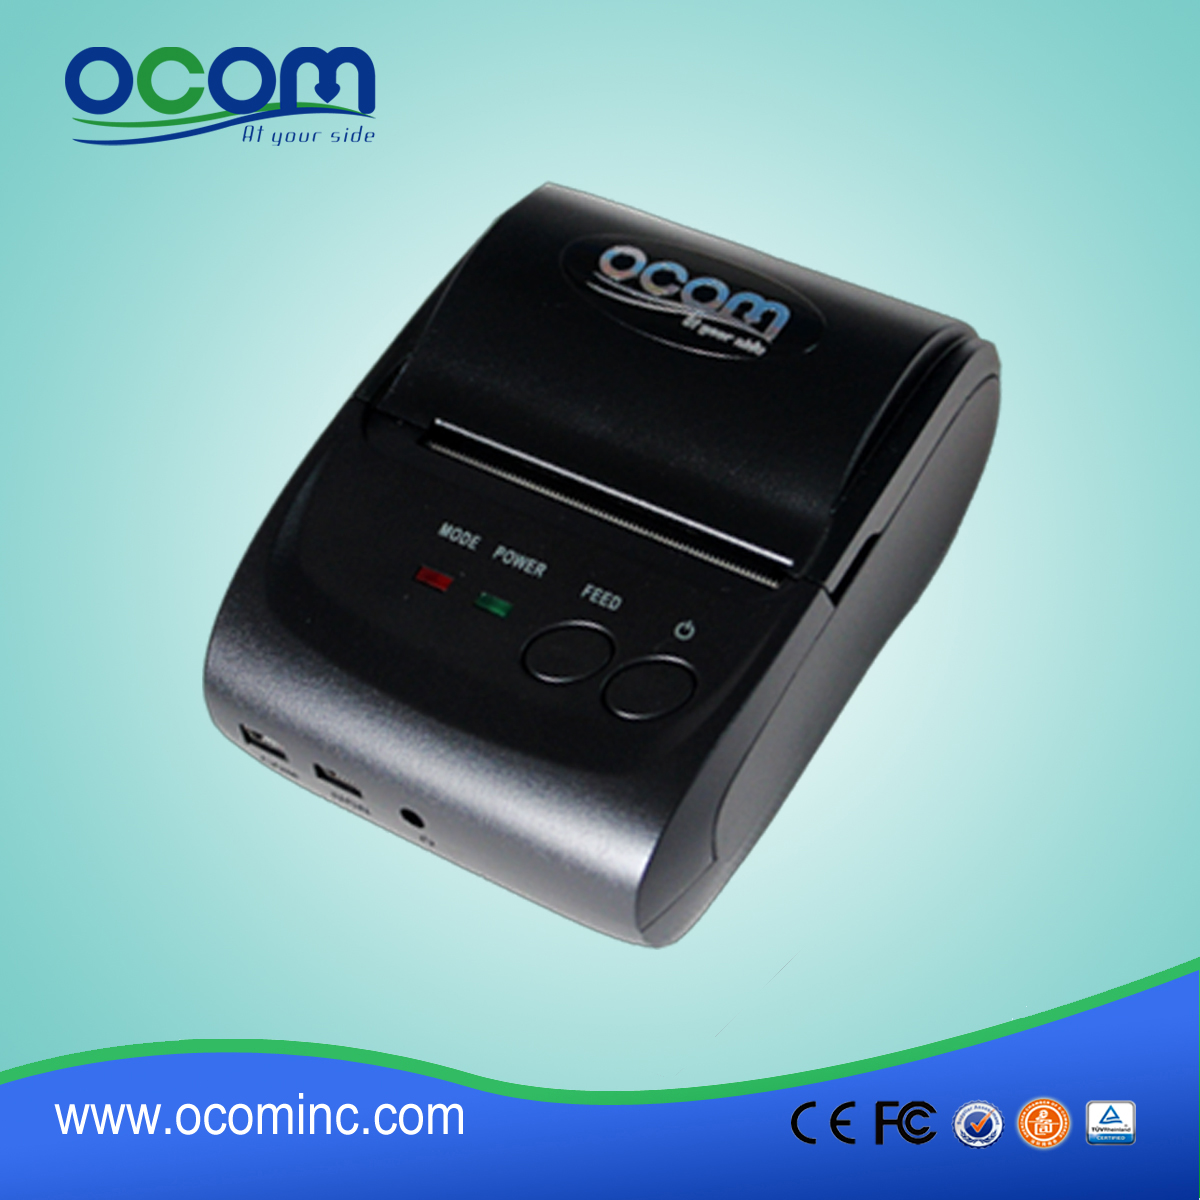 OCPP-M05: Android bluetooth stampante termica 58 millimetri, stampante termica qr code